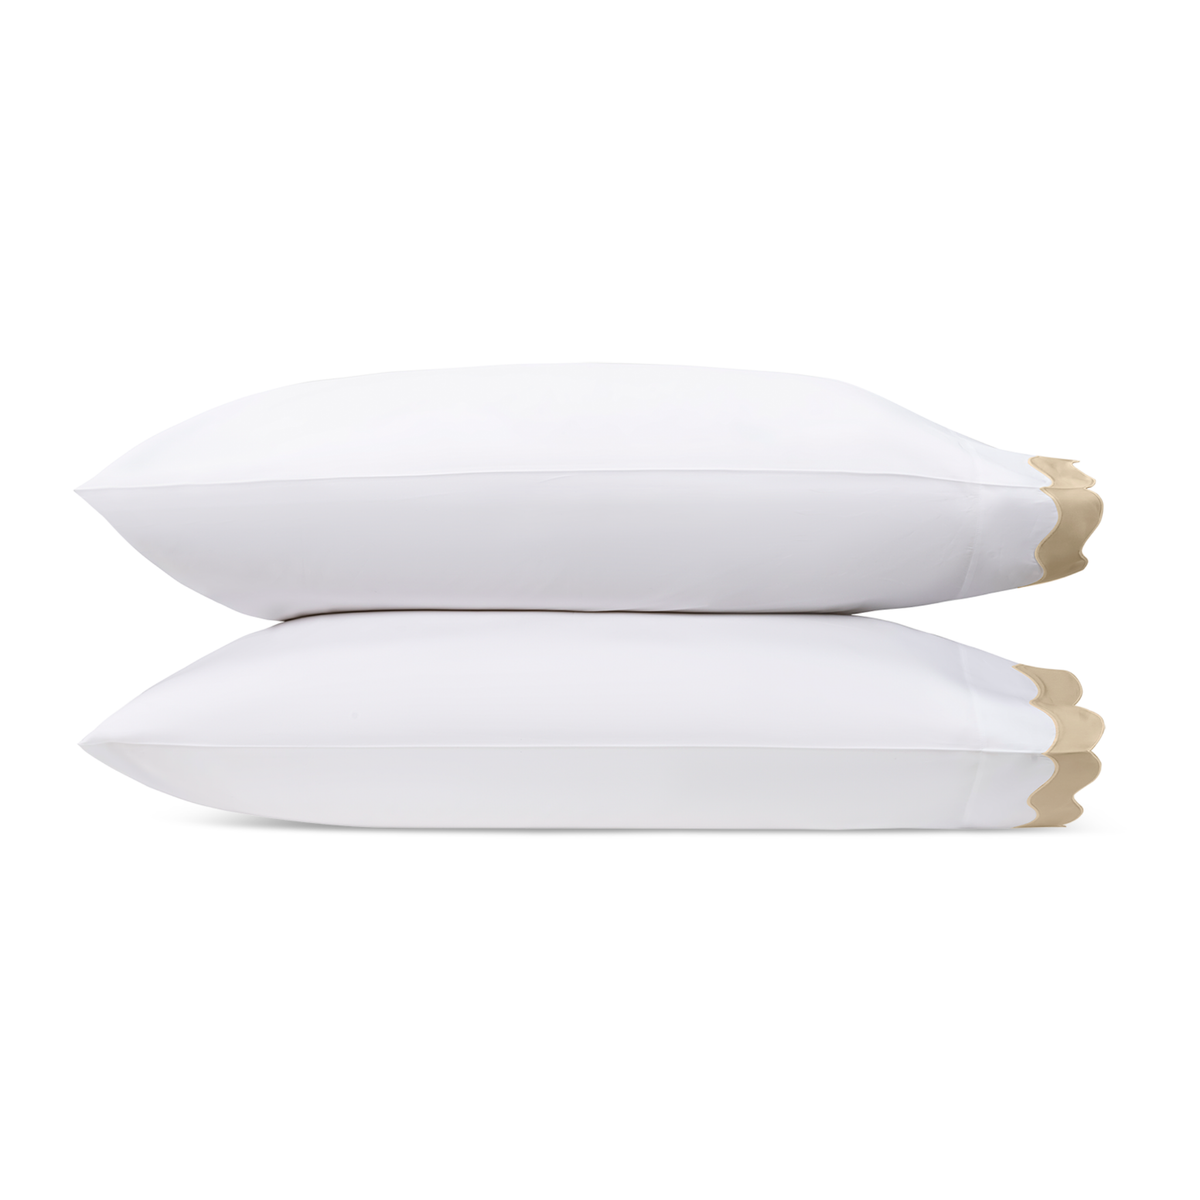 Pair of Pillowcases of Matouk Lorelei Bedding in Champange Color